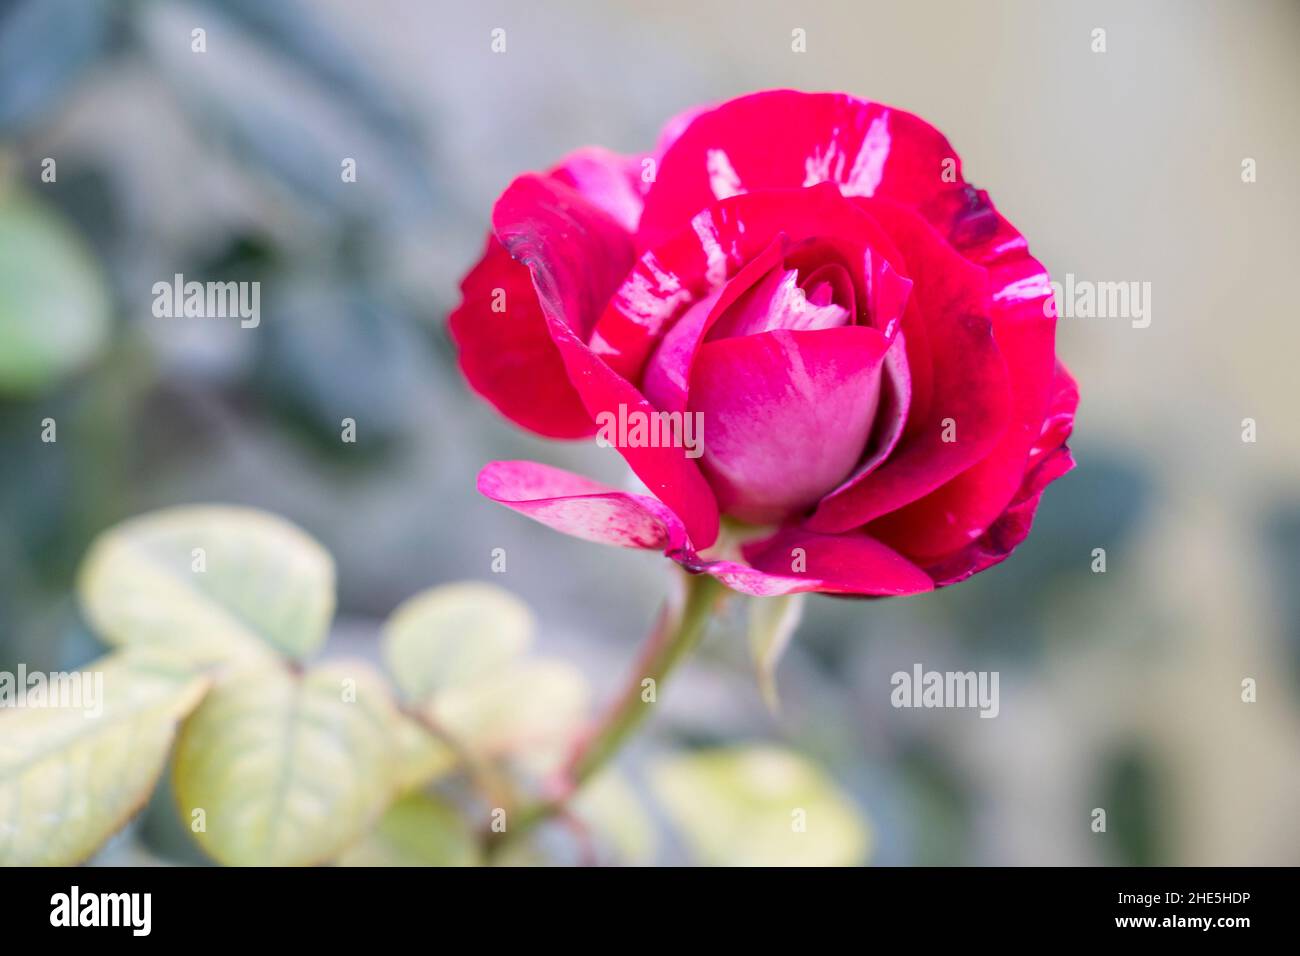 Bild der abradeten dabra-Rosenblüte Stockfoto